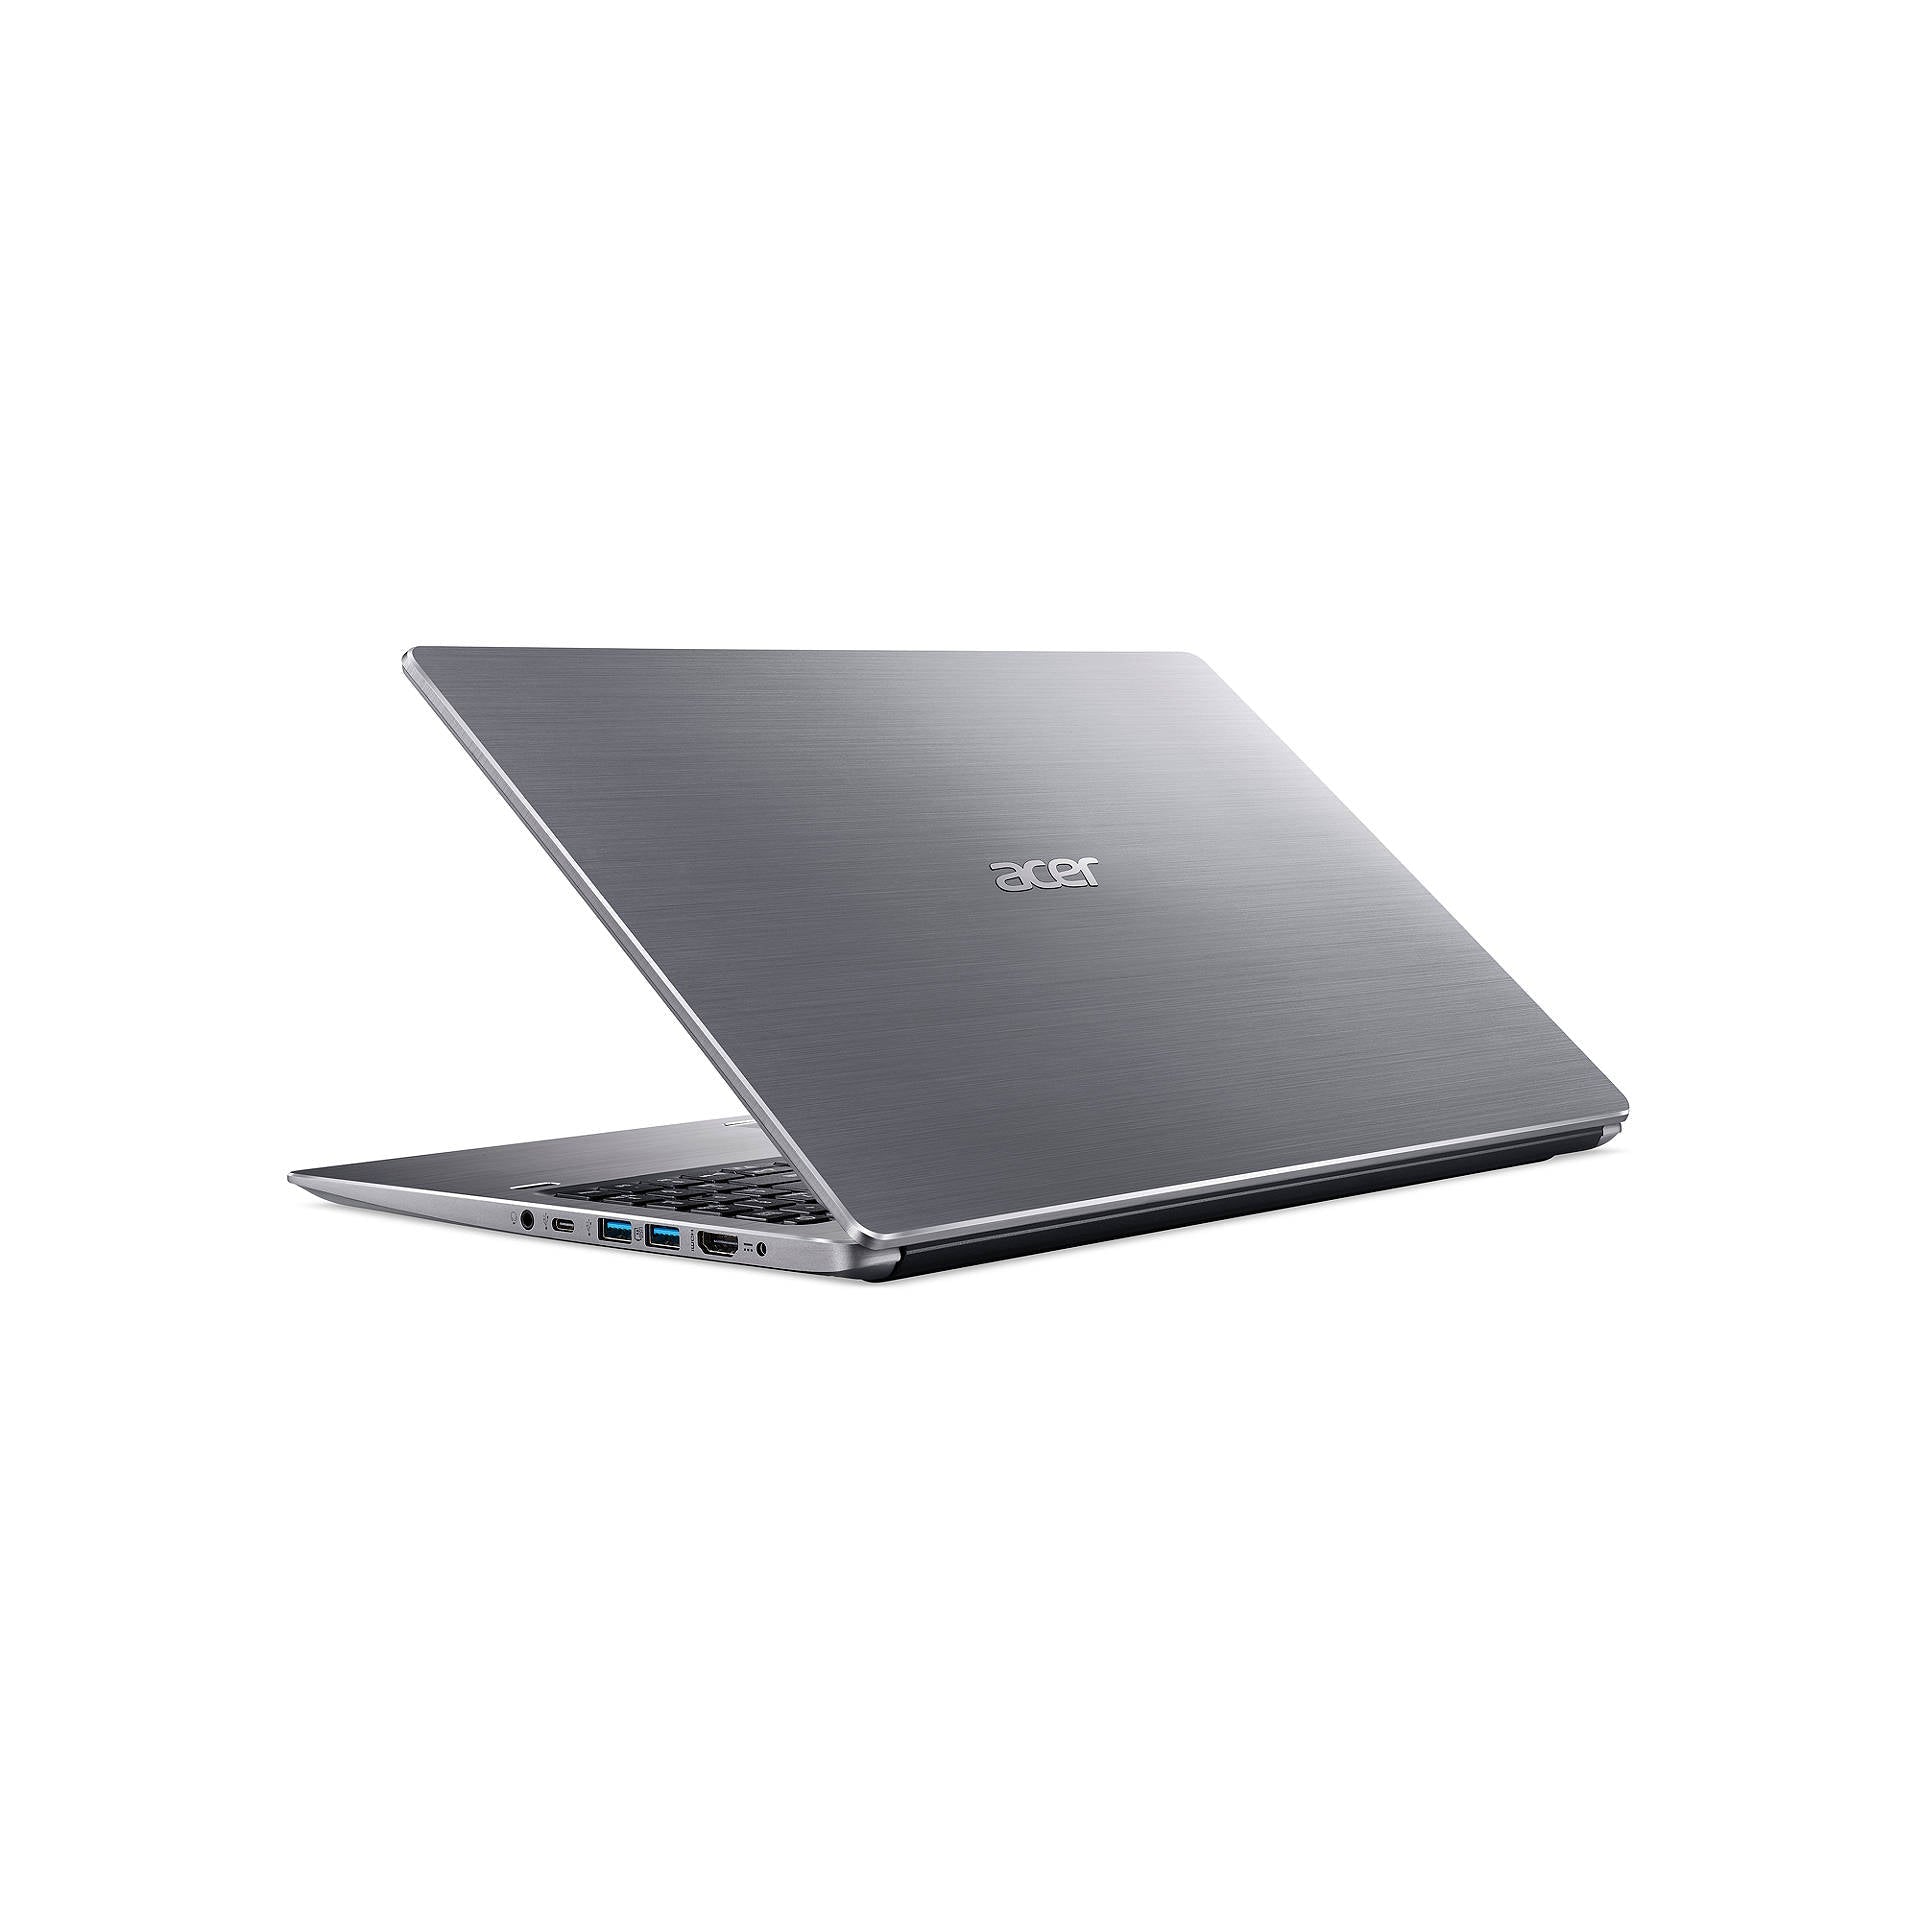 Acer Swift 3 SF314-54-5555 Laptop Intel Core i5-7200U 8GB RAM 128GB SSD 15.6" - Silver